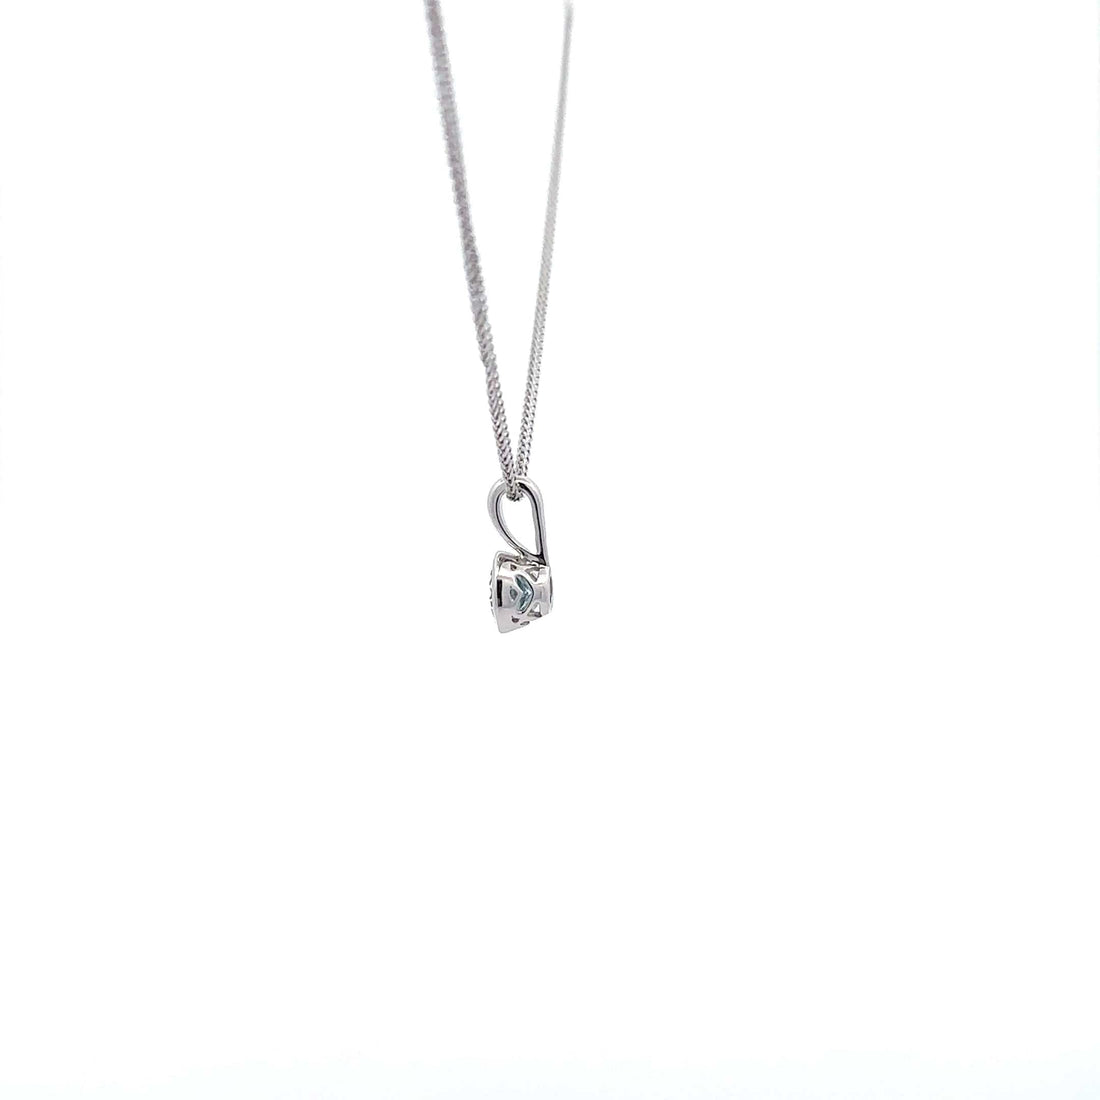 Baikalla Jewelry Aquamarine Necklace Baikalla Sterling Silver Round Aquamarine AAA Pendant Necklace